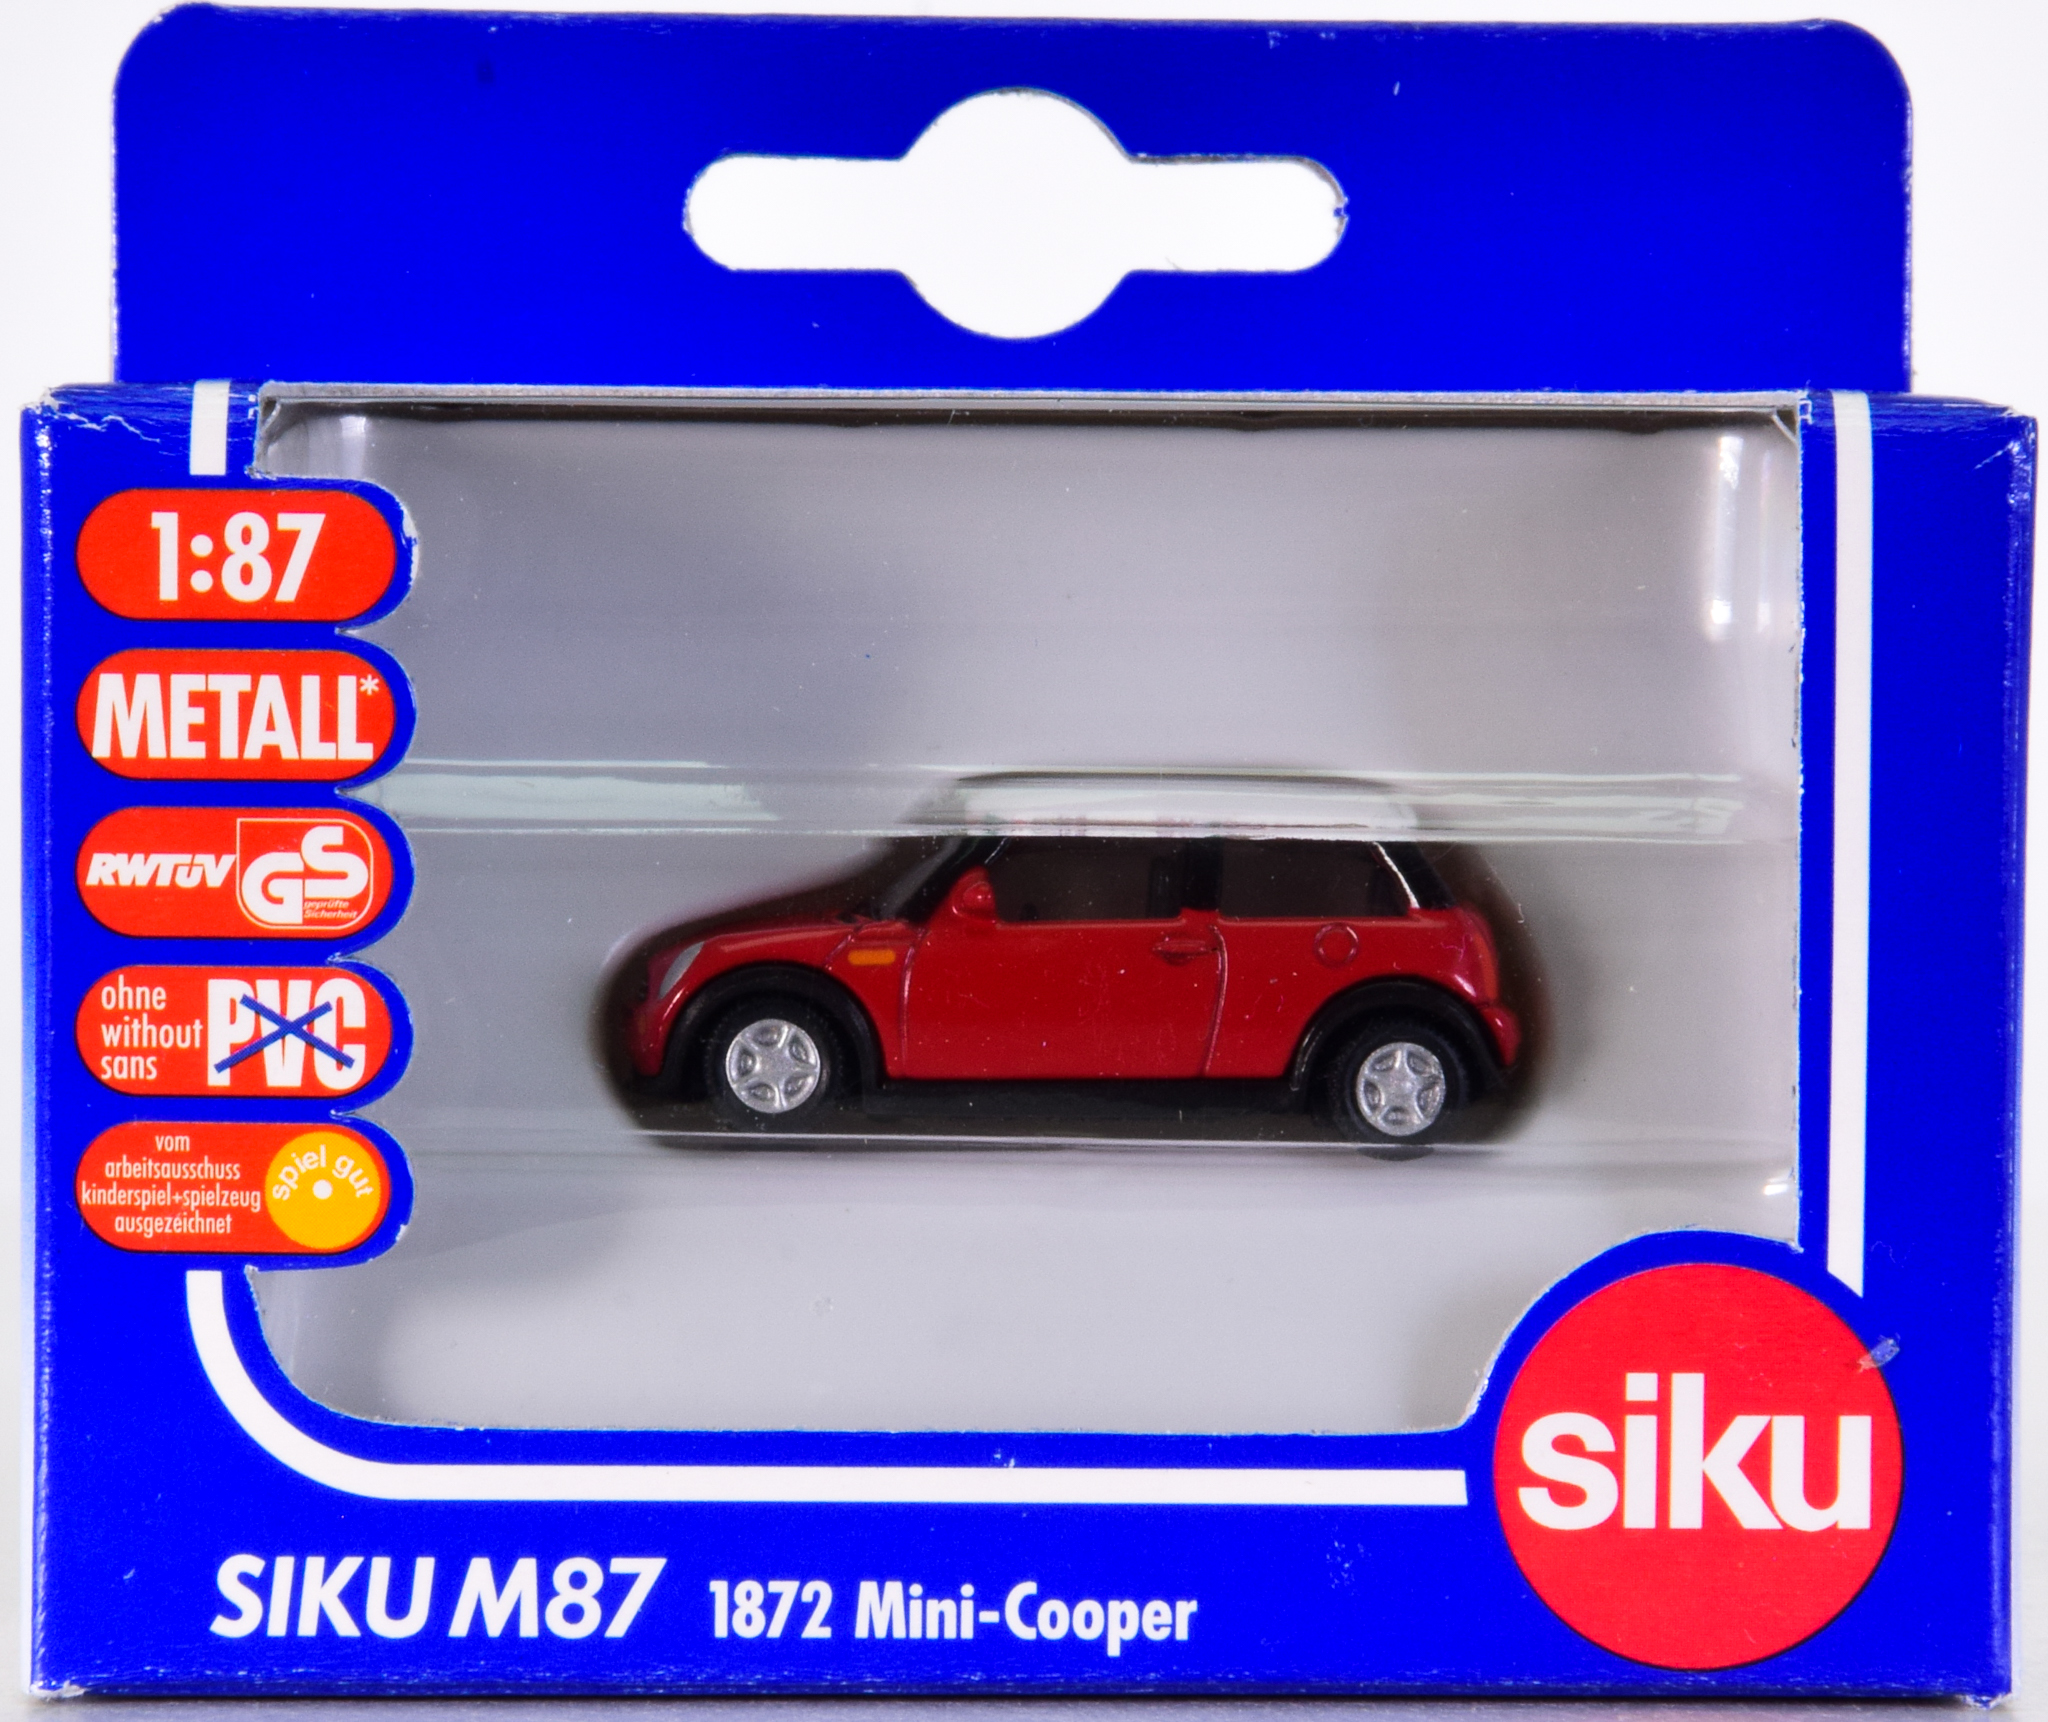 OXID eShop 6 | Siku 1872 (1:87) - Mini-Cooper M87, rot | purchase online